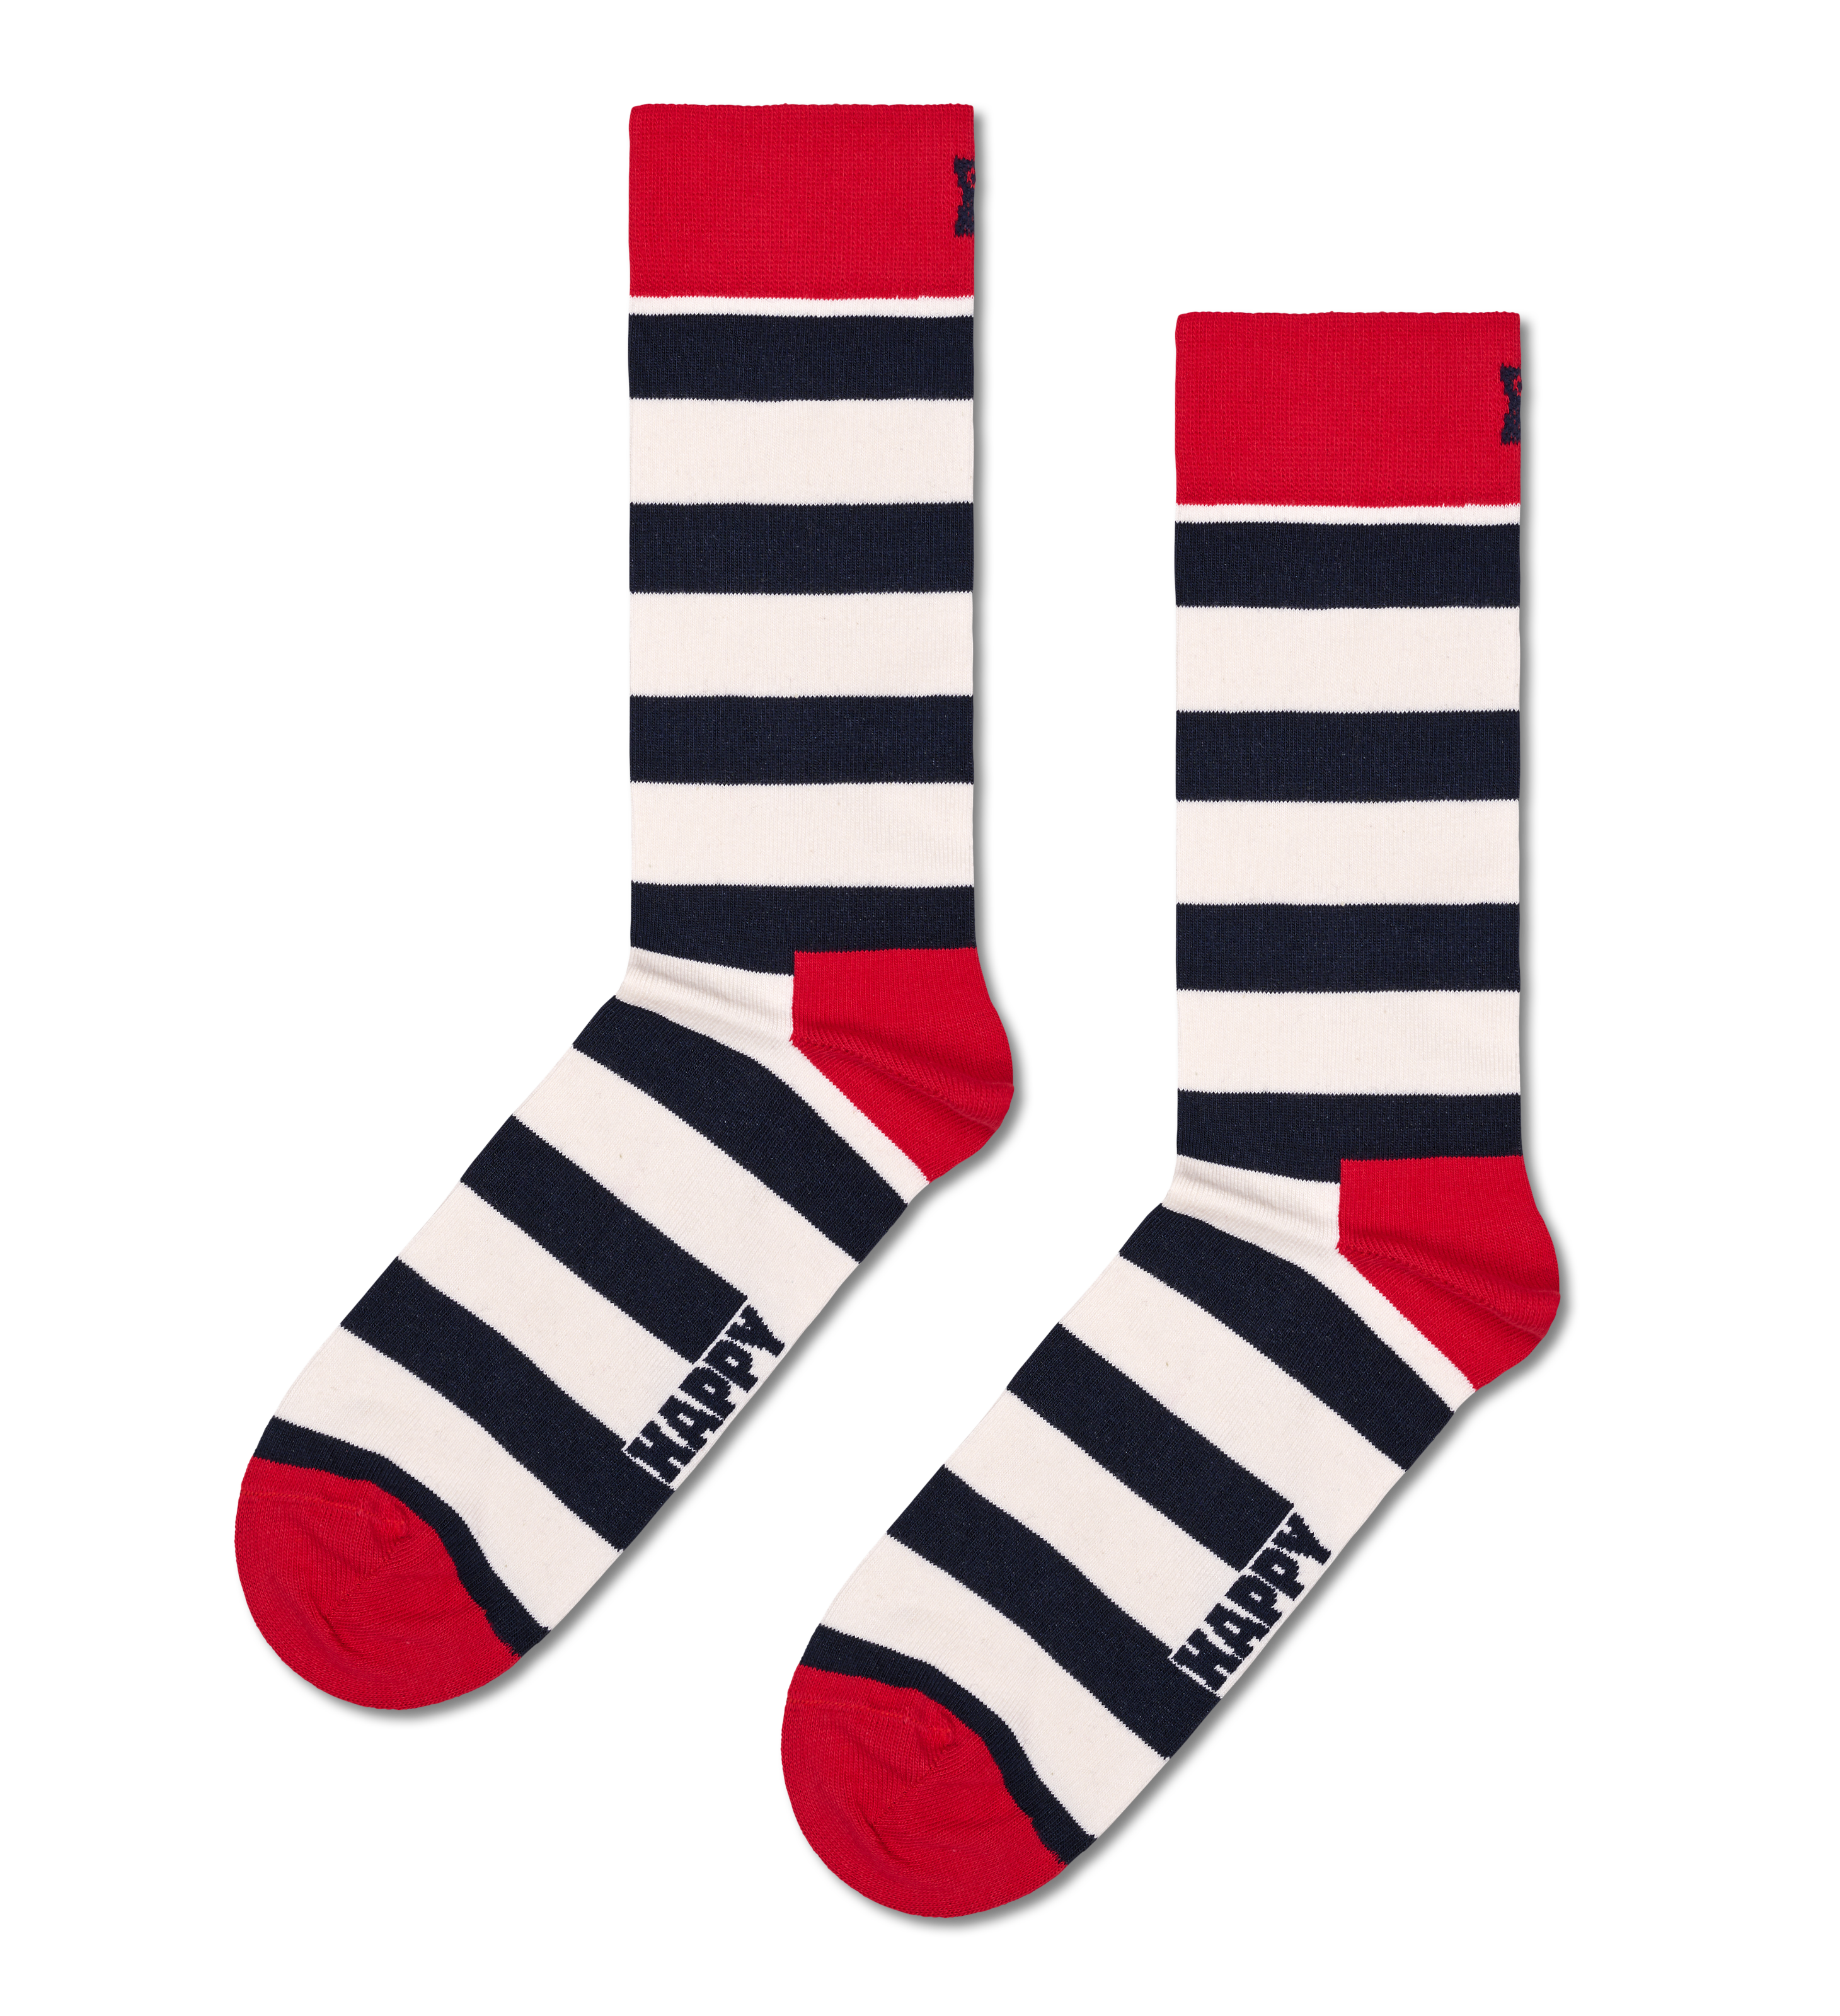 4-Pack Classic Navy Crew Socks Gift Set | Happy Socks US